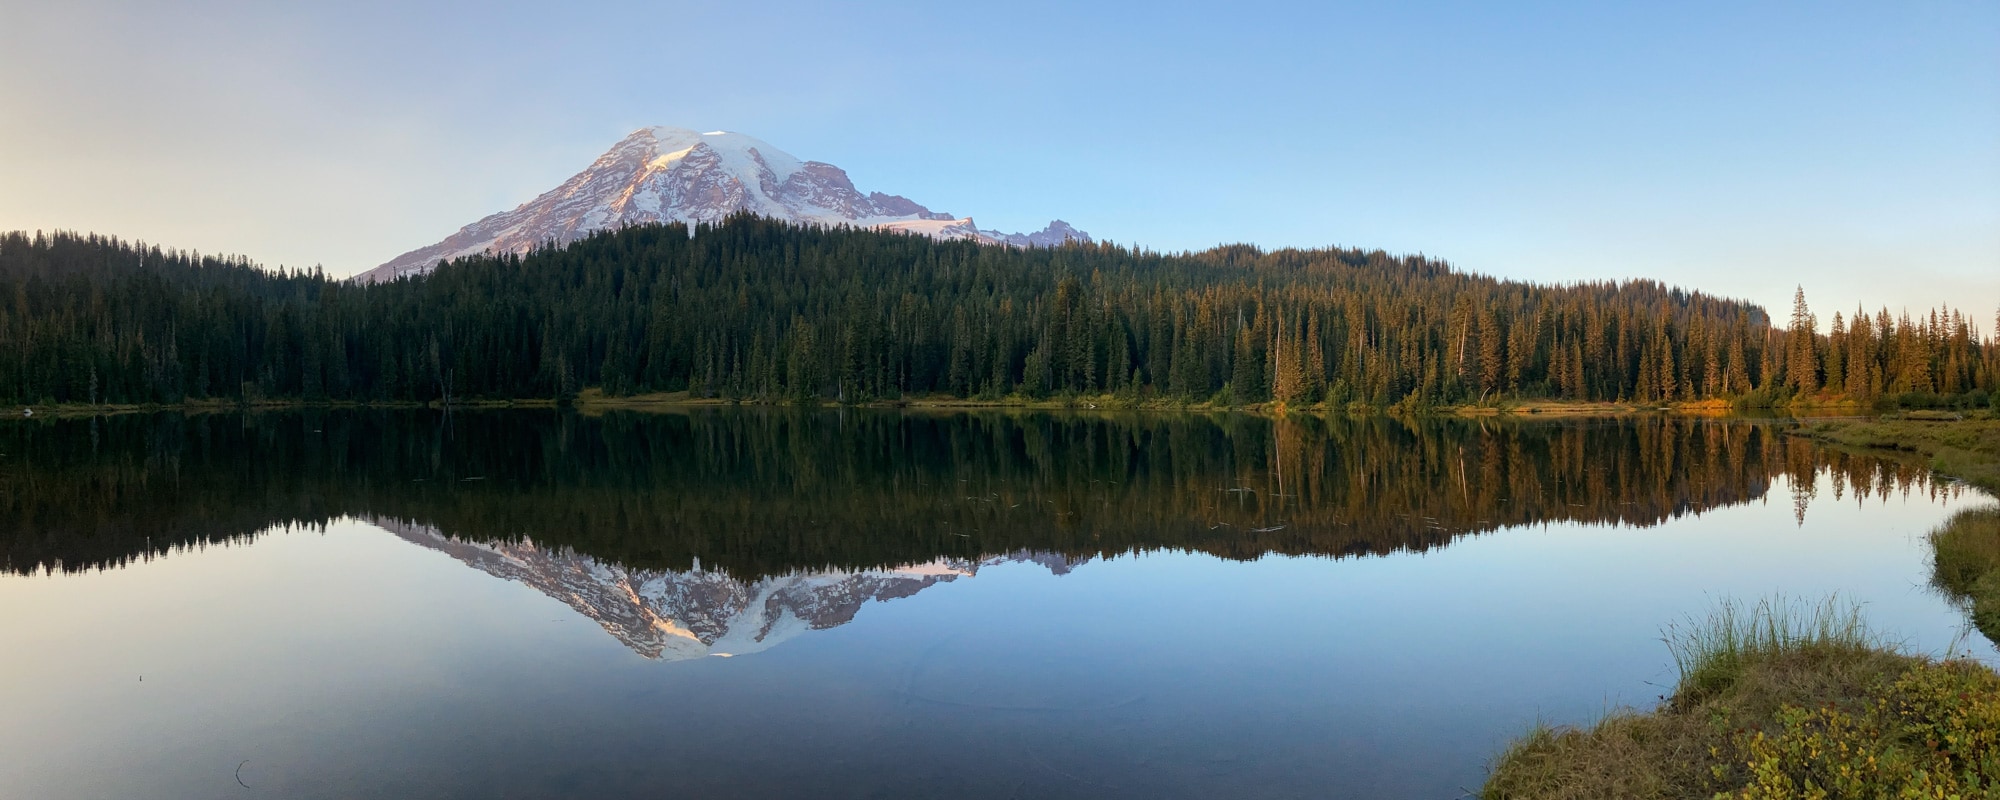 Mount Rainier National Park, Washington - Banner Reflection Lakes